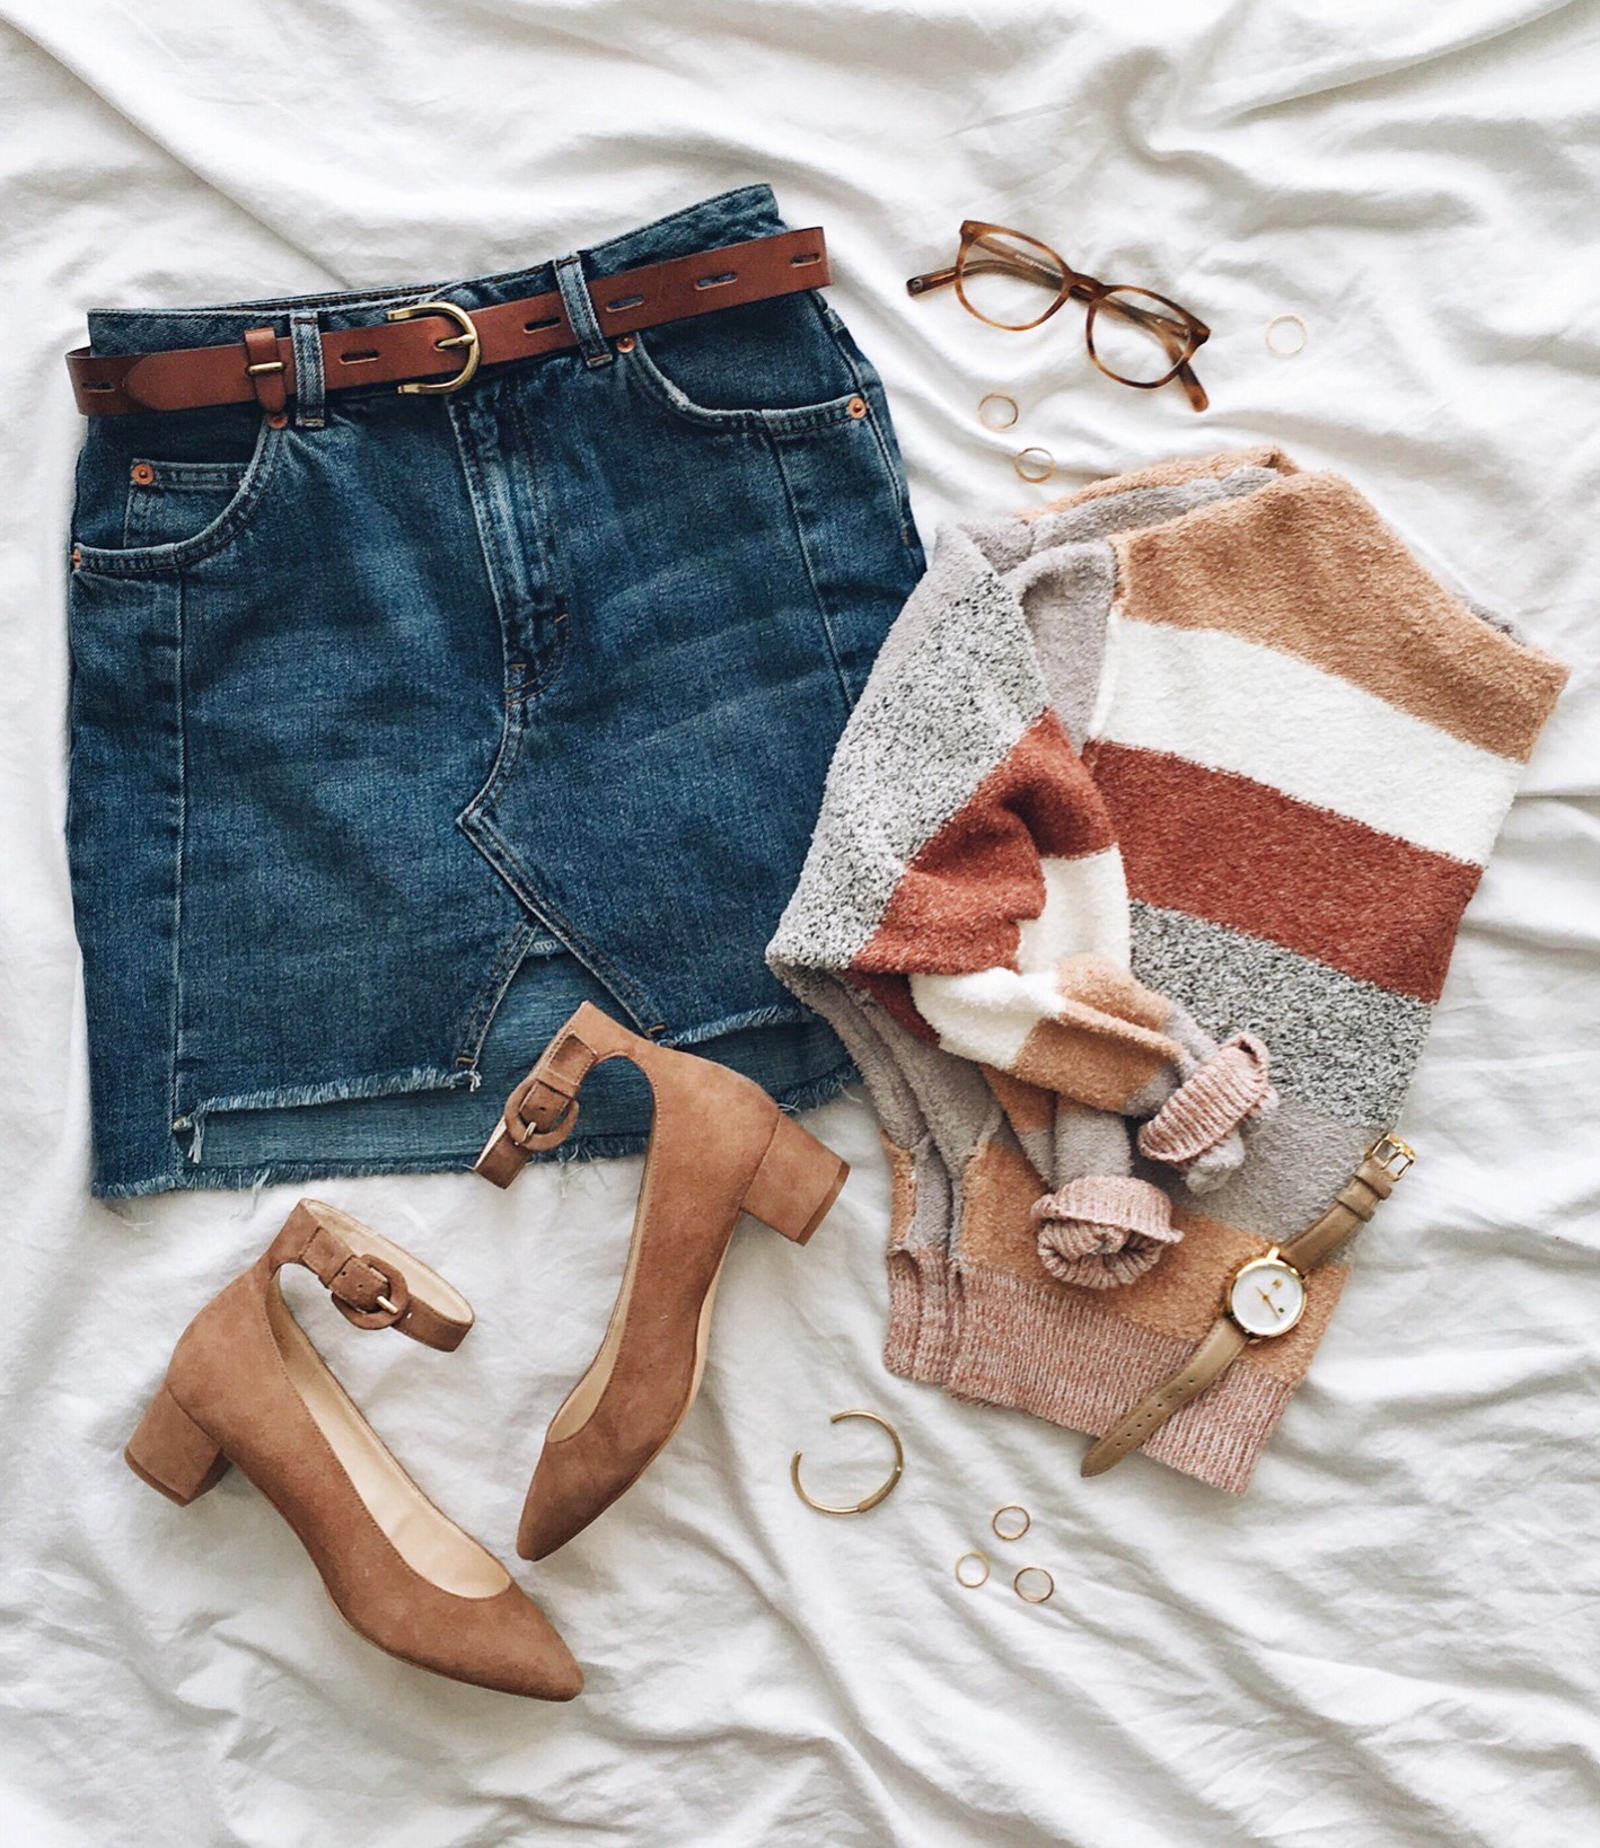 livvyland-blog-olivia-watson-instagram-roundup-austin-texas-cozy-winter-outfit-striped-sweater-block-heels